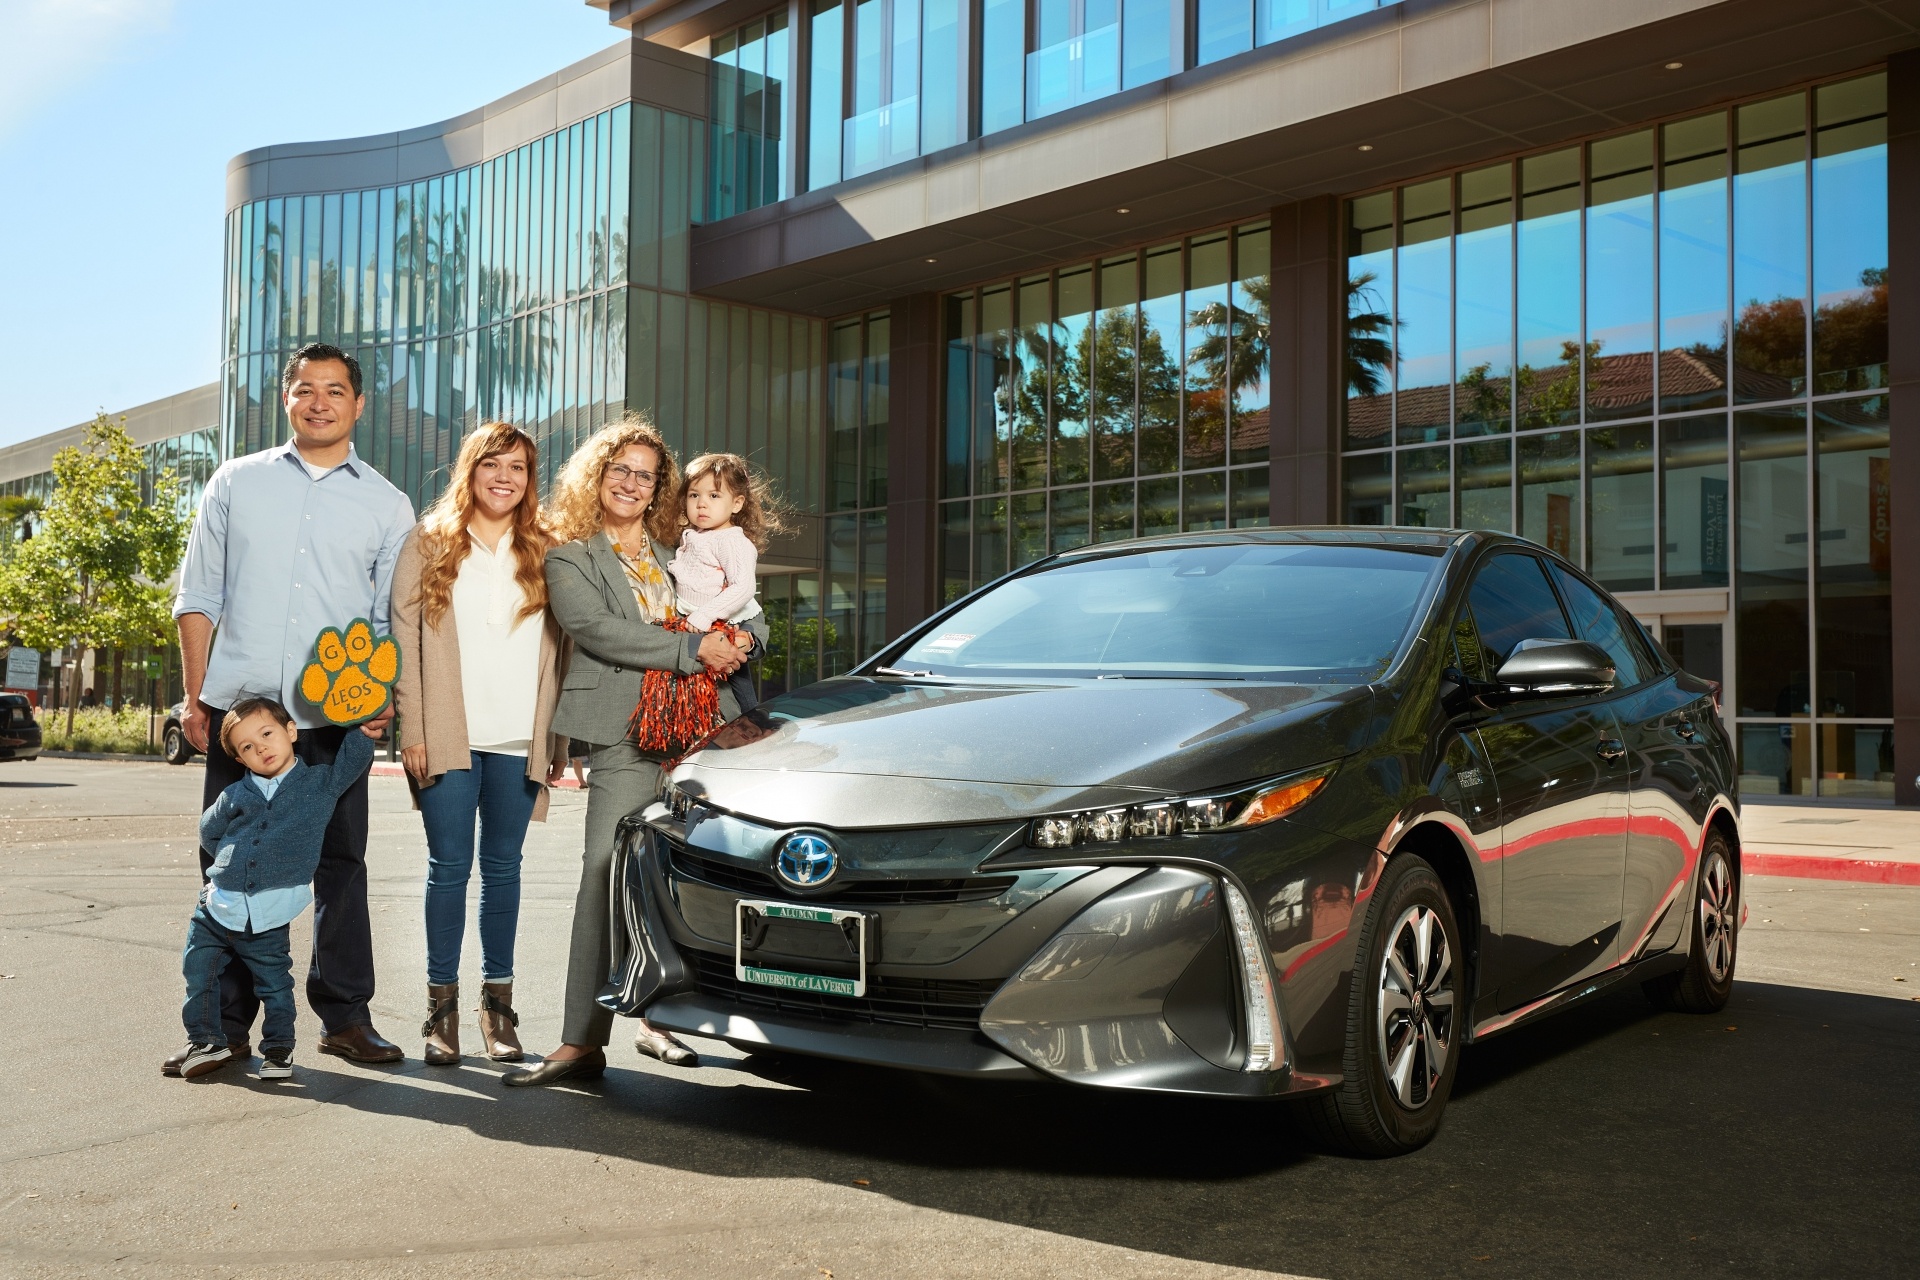 Scholarship fundraiser raffle winner poses with new Toyota Prius